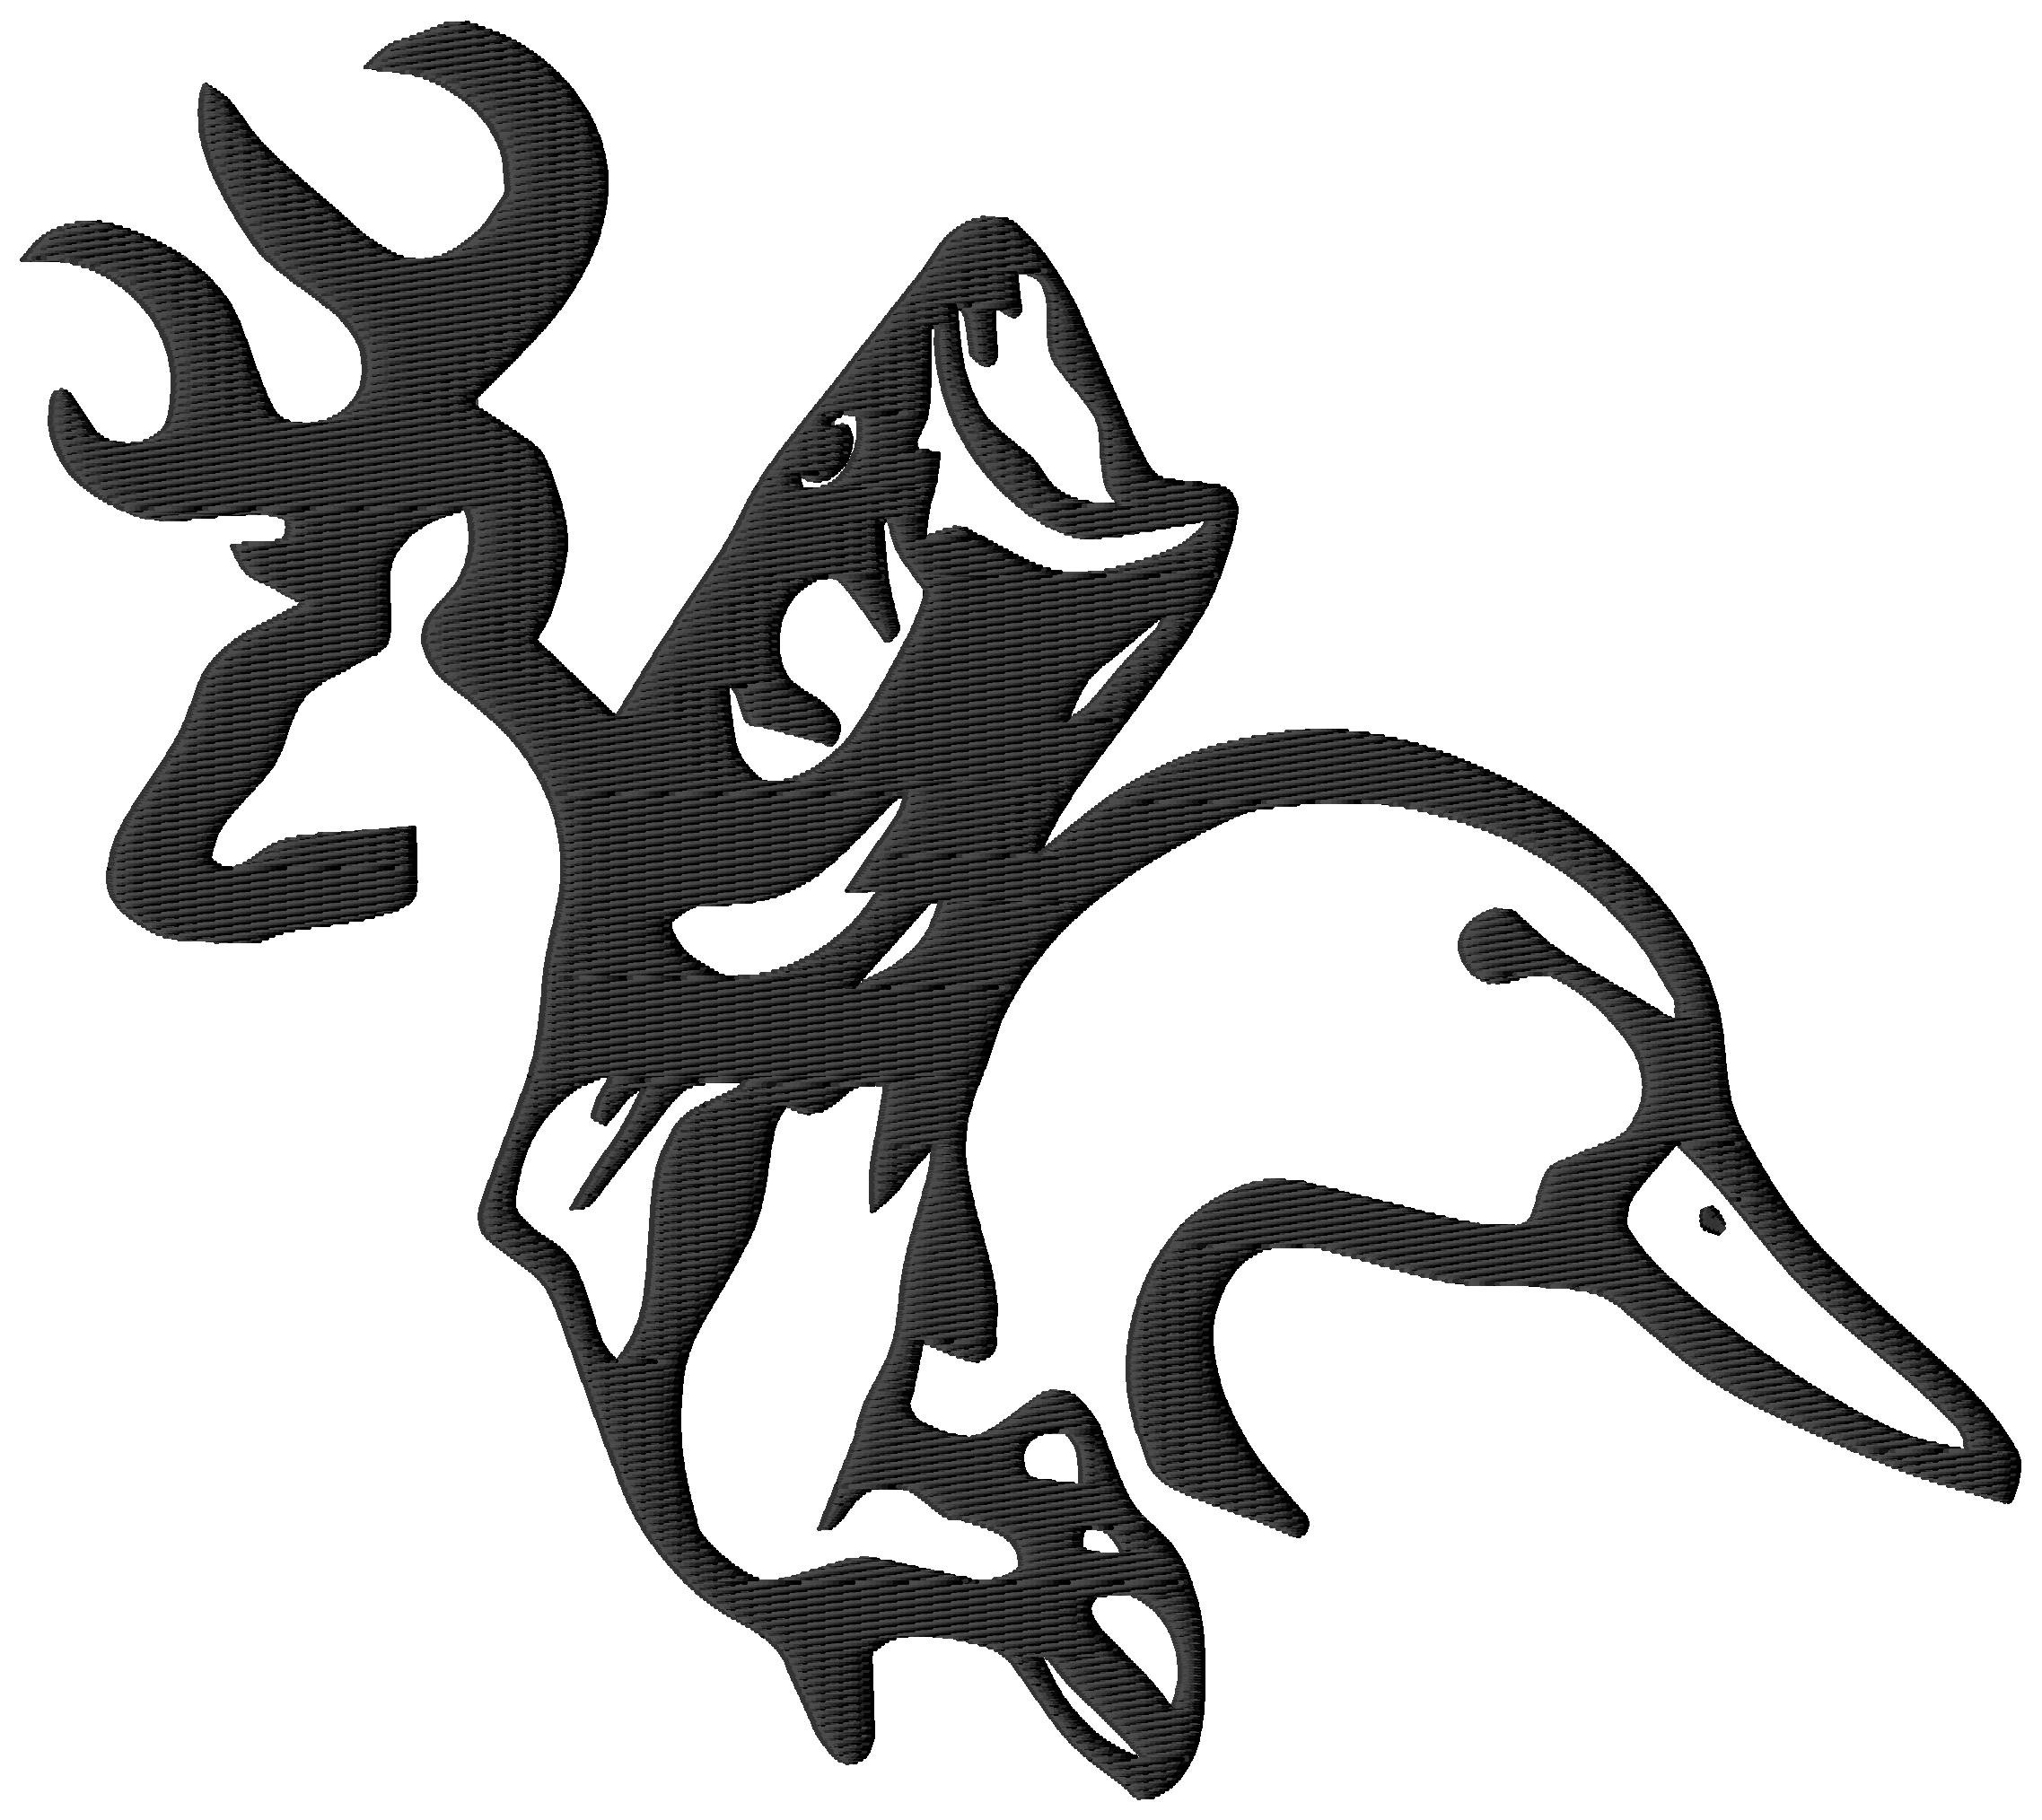 Browning Buck Logo Wallpaper (49+ images)